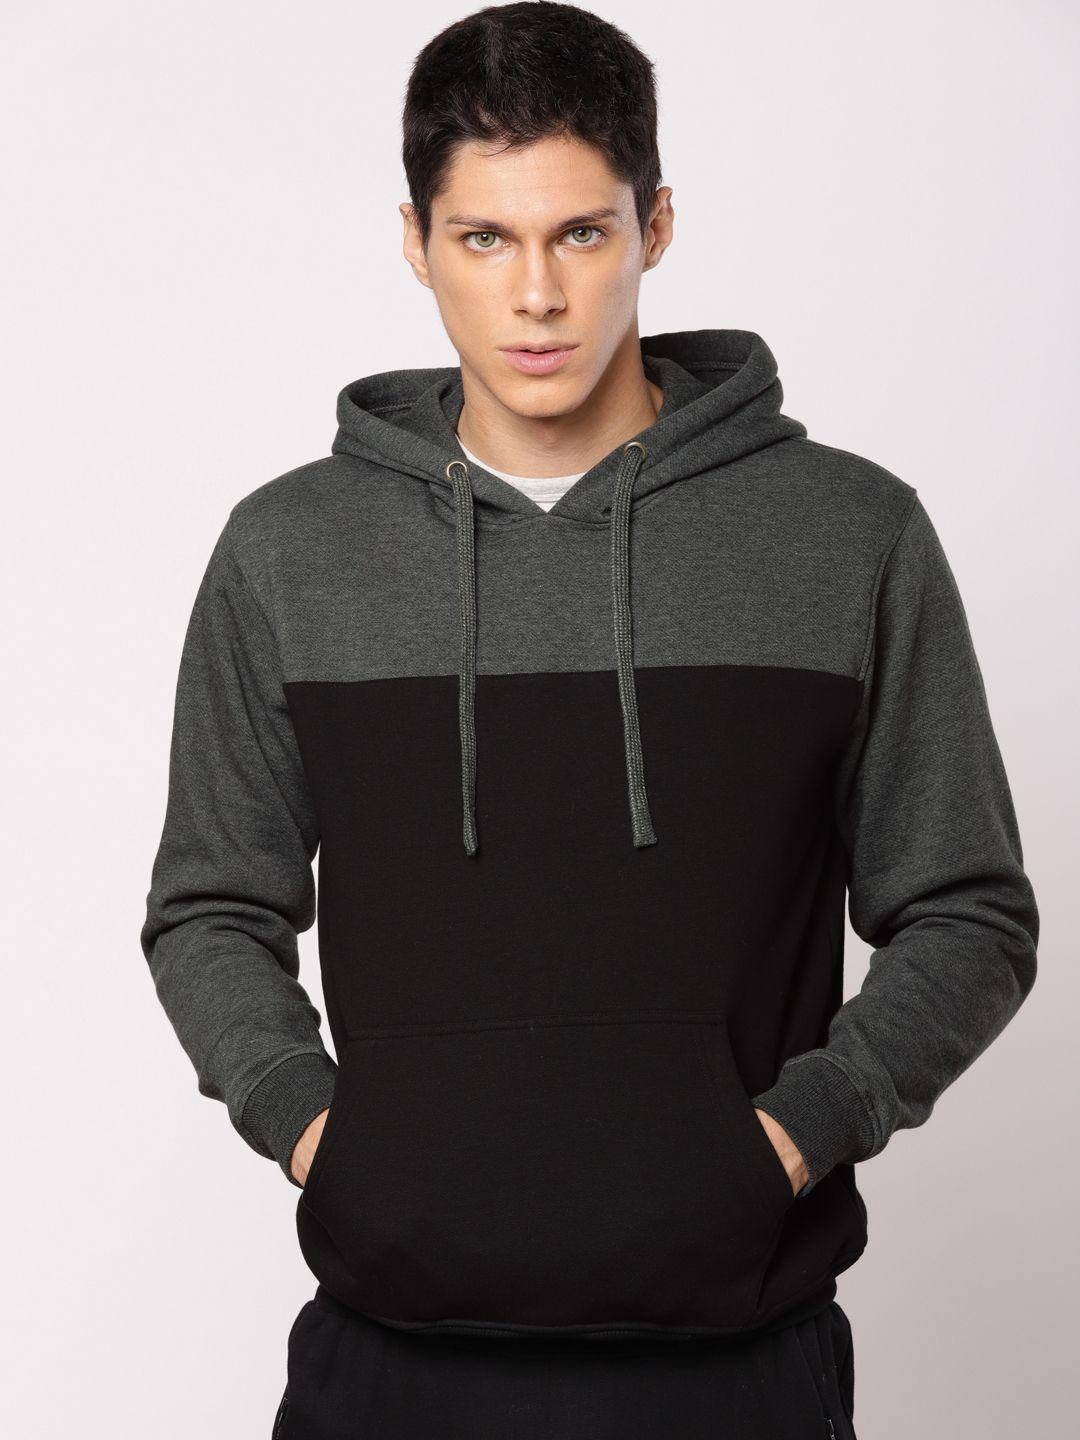 ether men black & charcoal grey colourblocked hooded sweatshirt